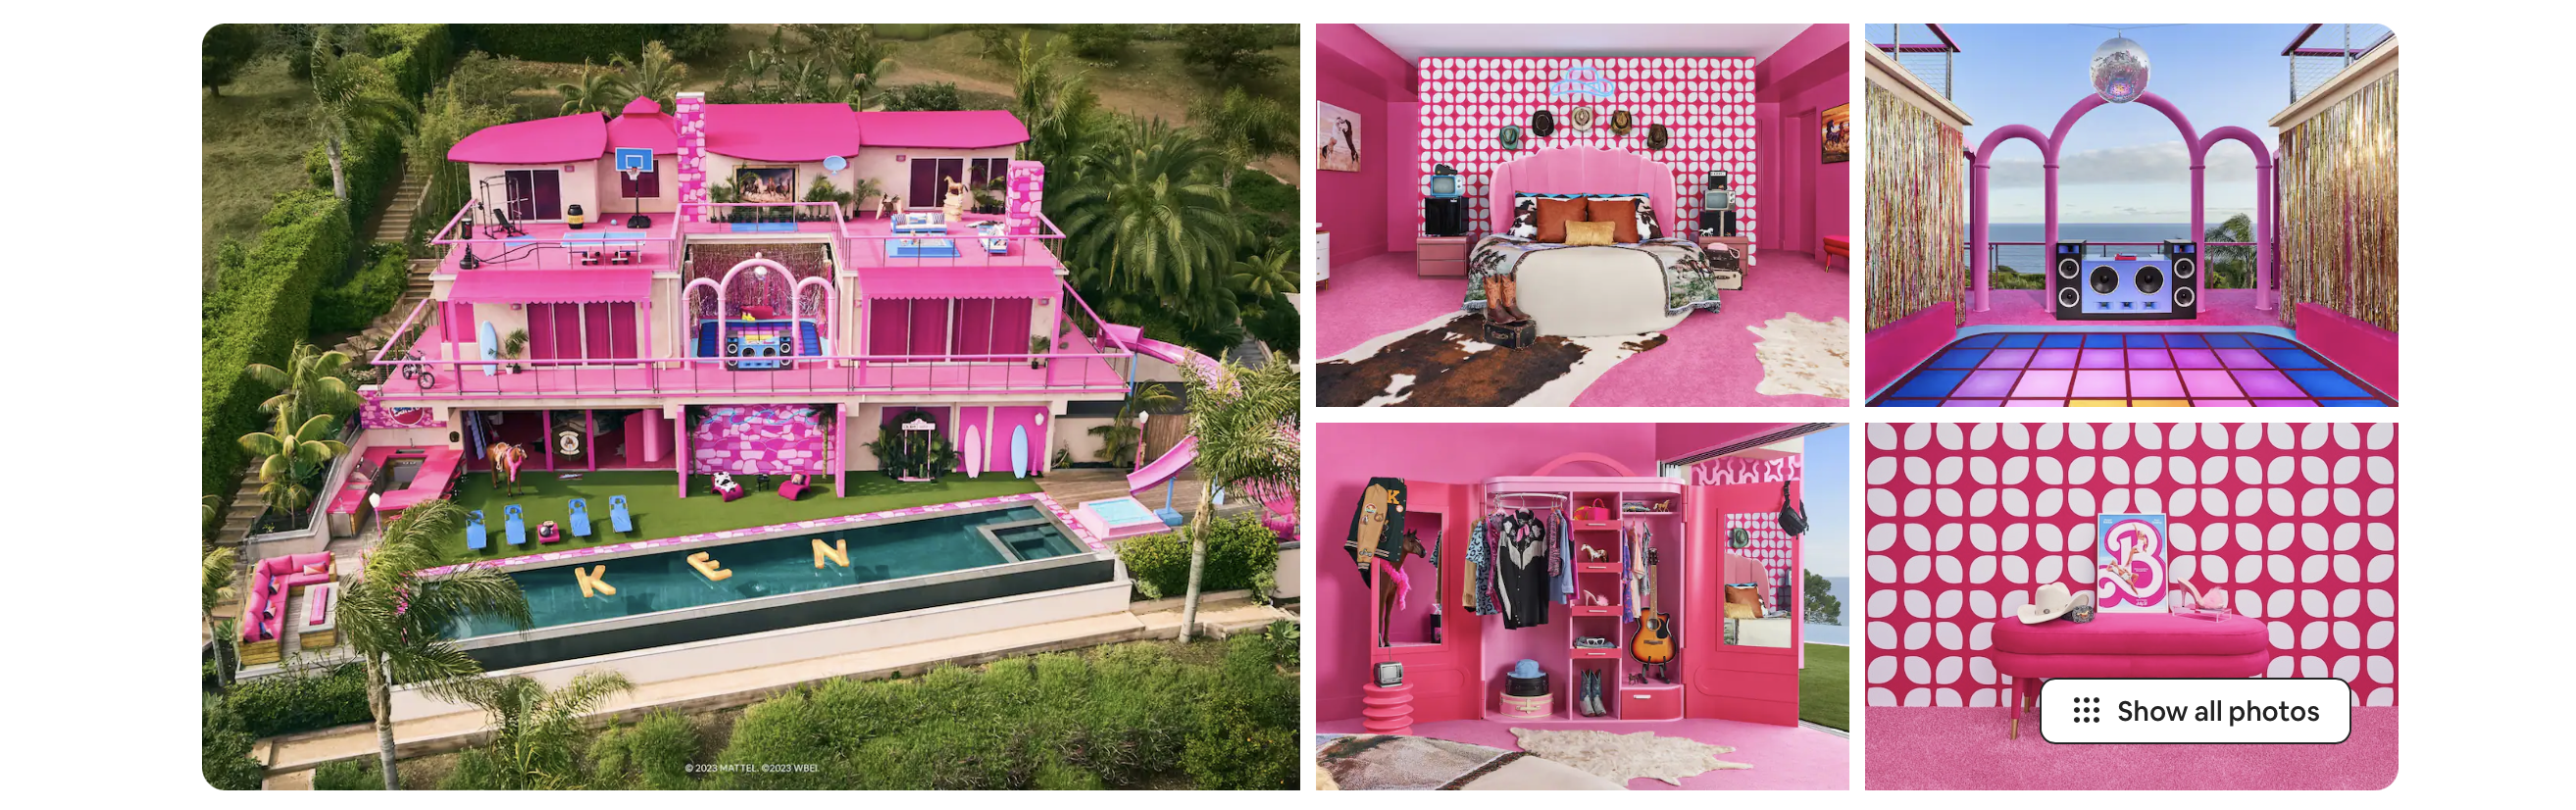 PropellerAds-Barbie-marketing-mania-airbnb